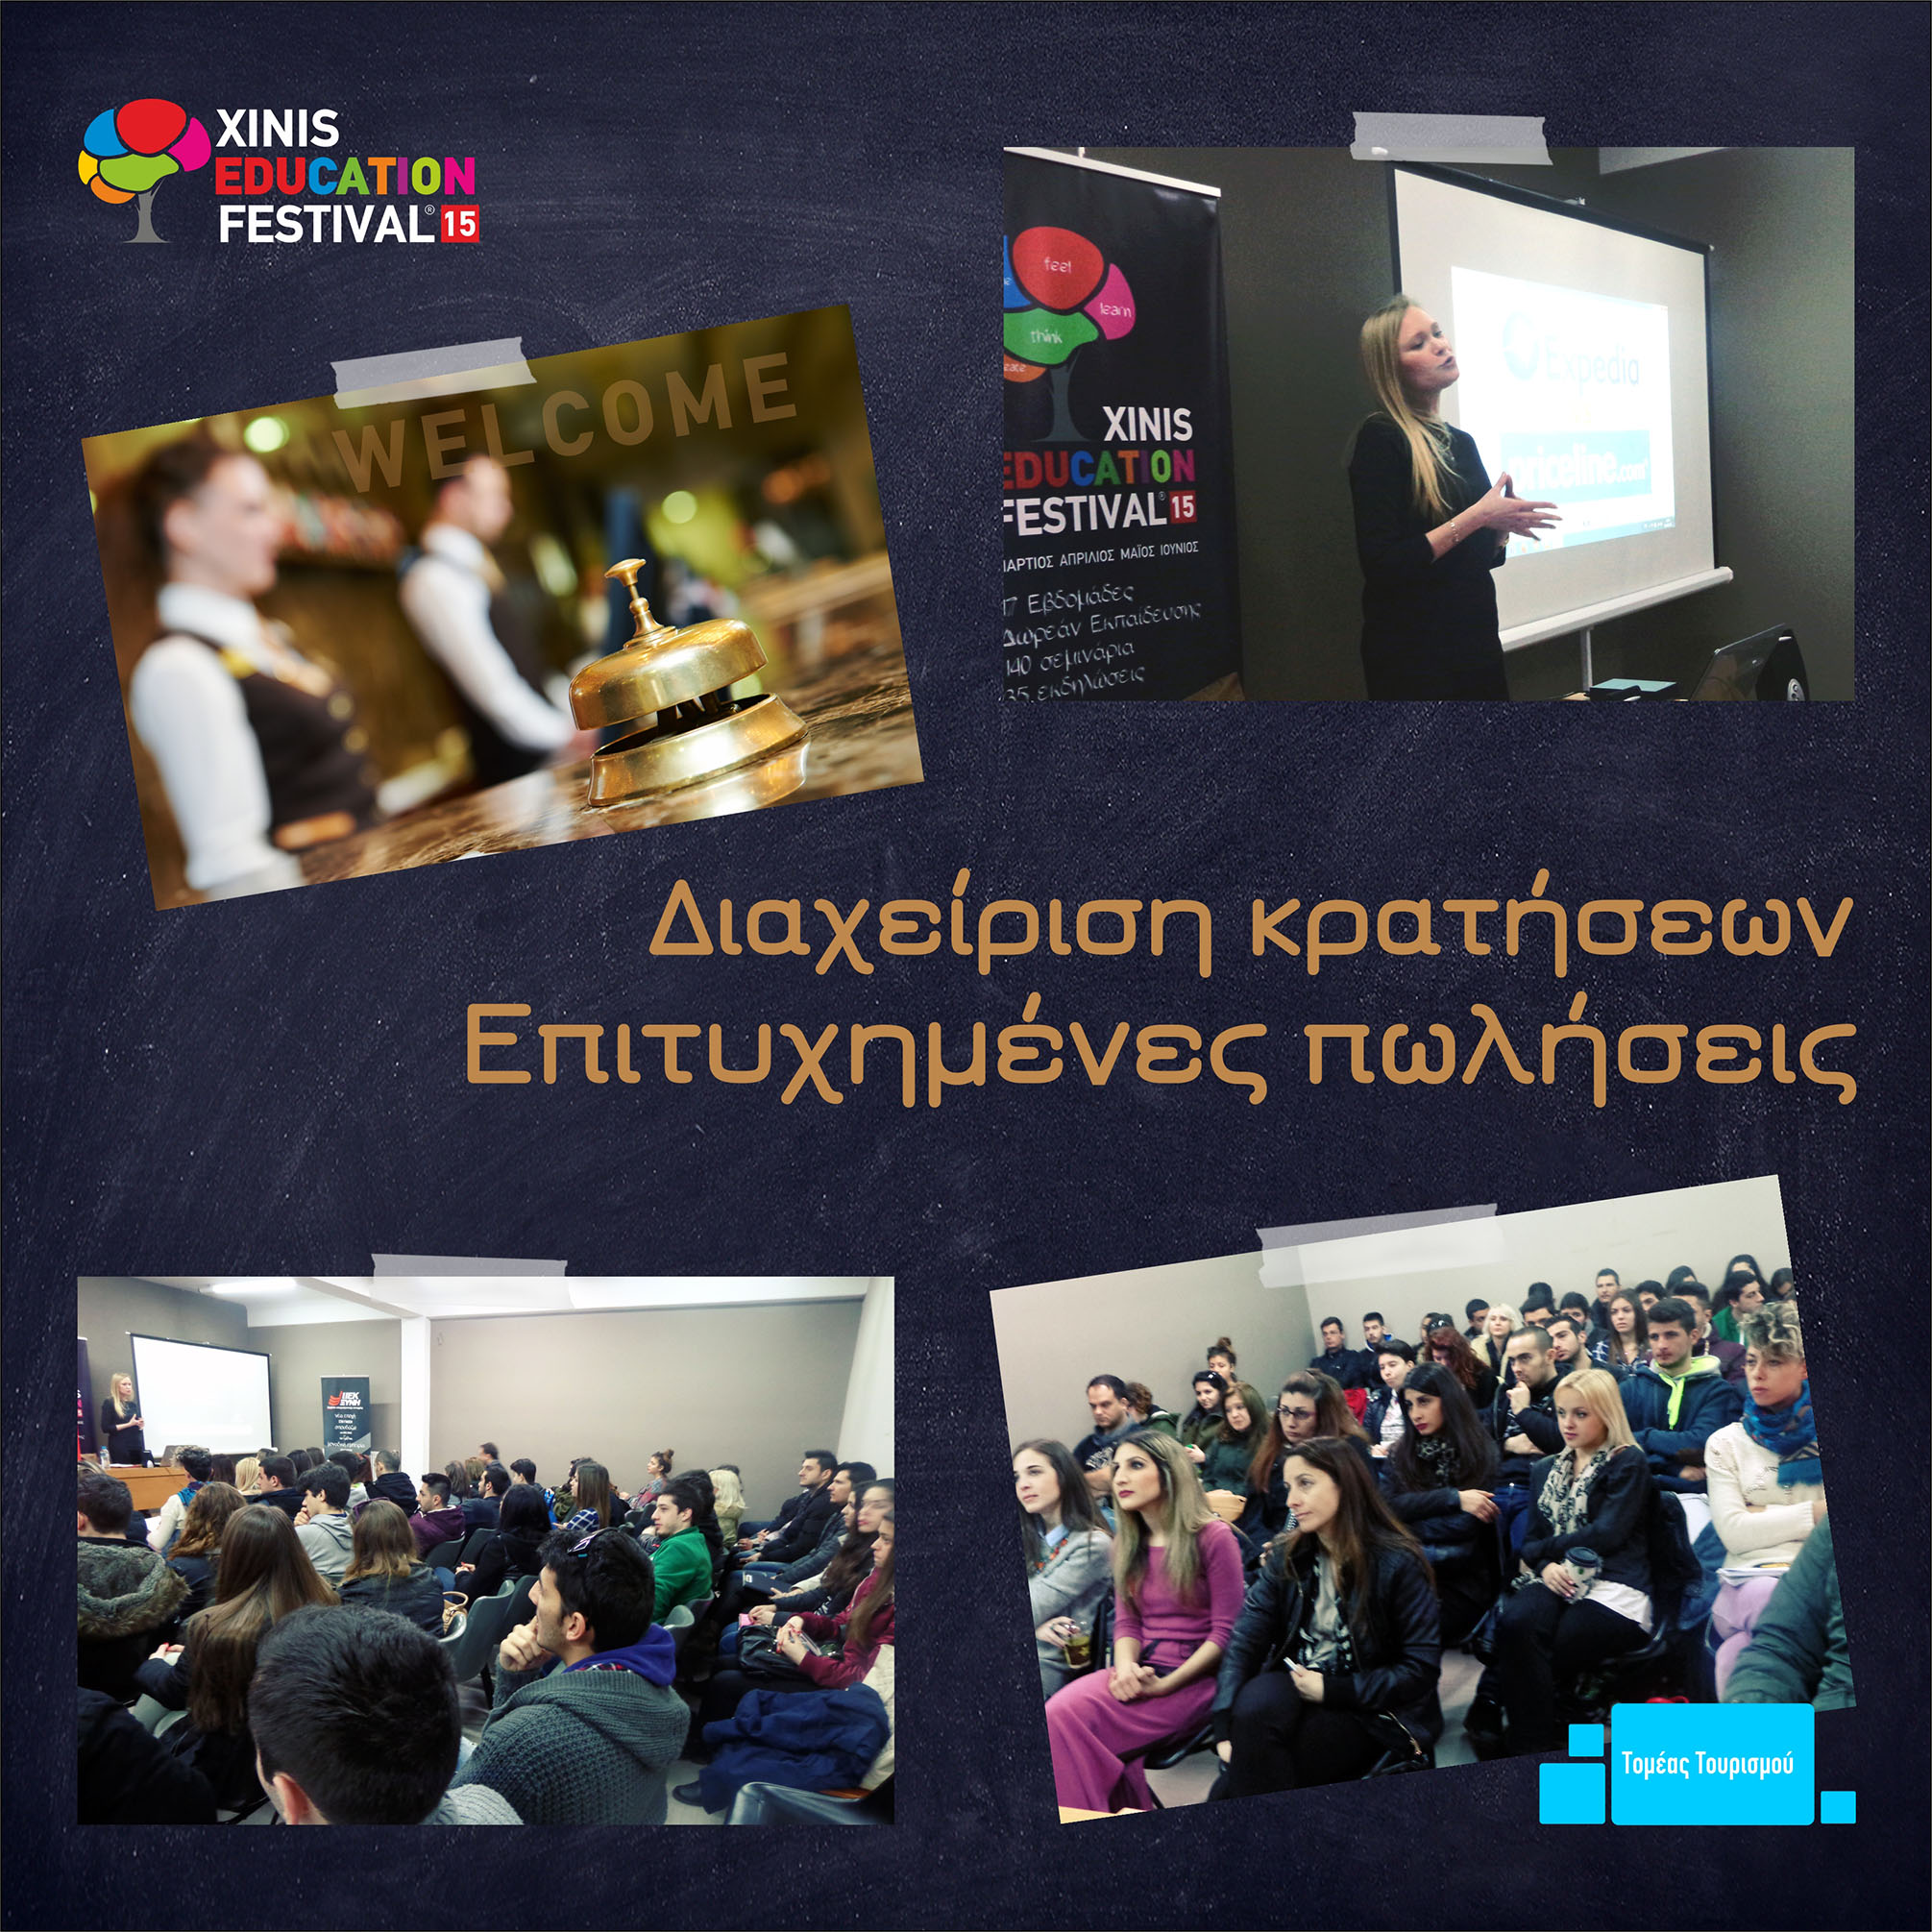 Xinis Education Festival 2015: Ο τουρισμός, το χρυσάφι της Ελλάδας και η εκπαίδευση της νέας γενιάς από τον Εκπαιδευτικό Όμιλο ΞΥΝΗ Μακεδονίας!